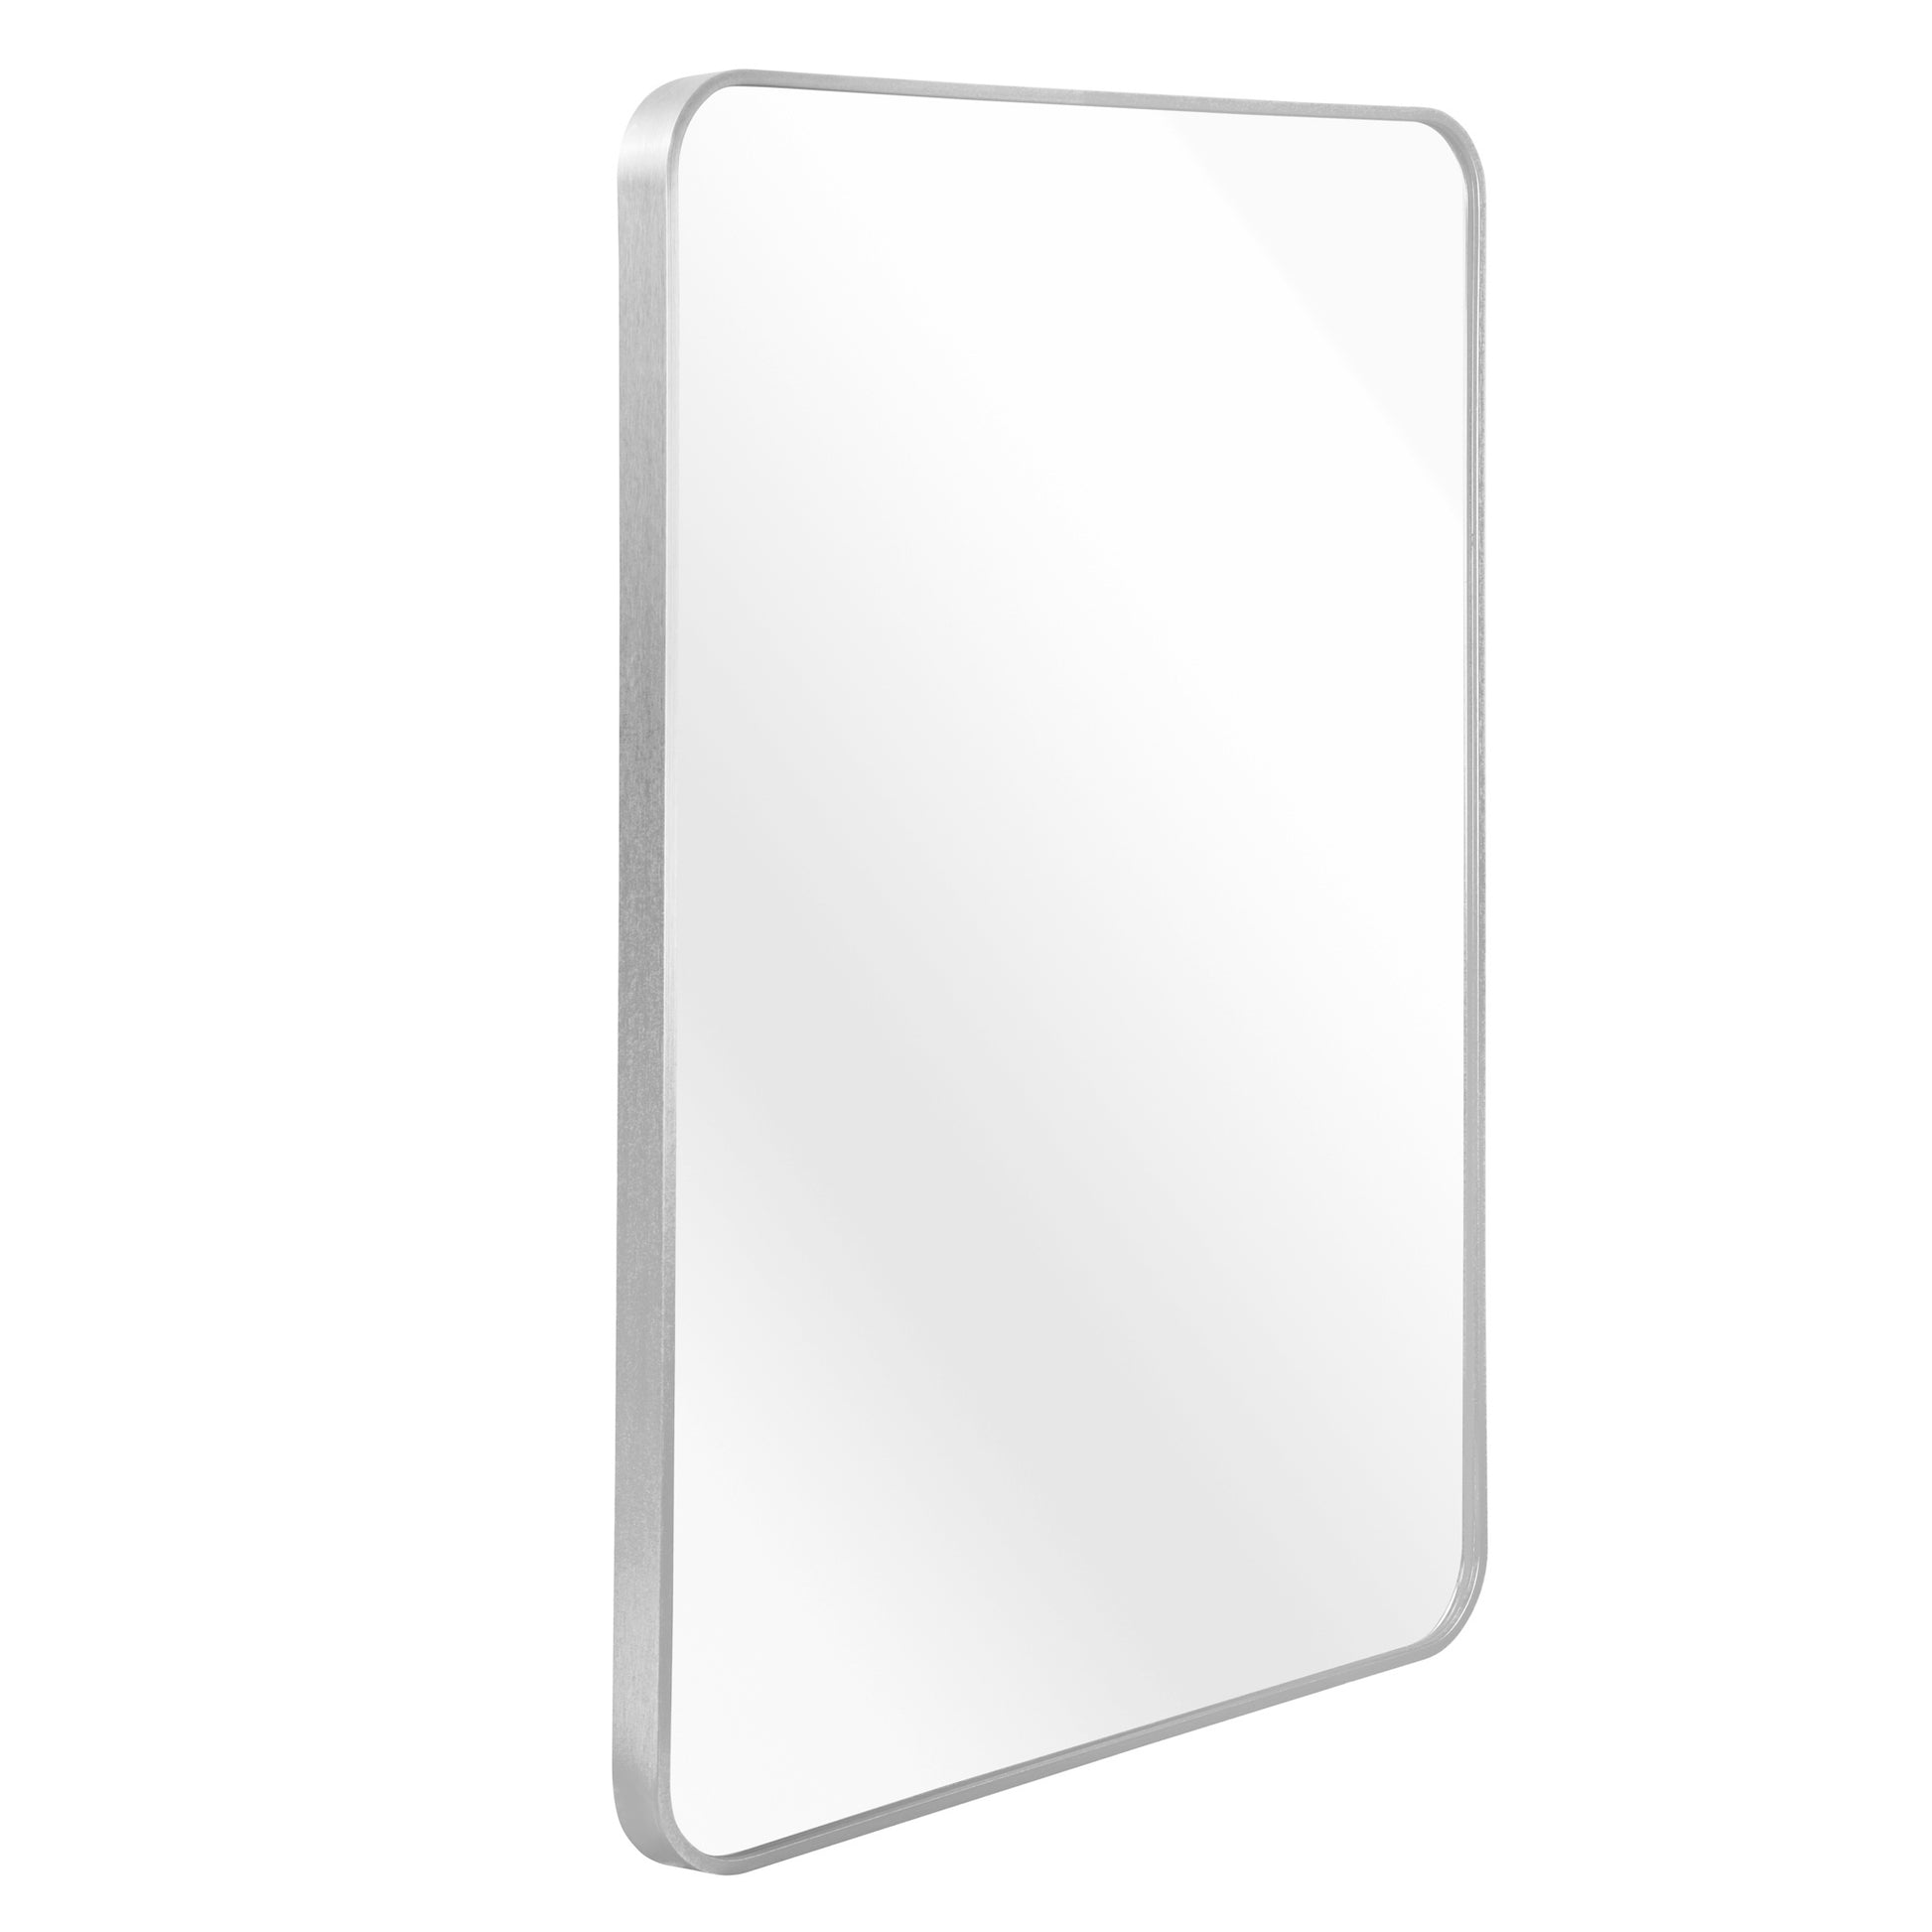 Silver 24 "x32" Rectangular Bathroom Wall Mirror silver-classic-mdf+glass-aluminium alloy